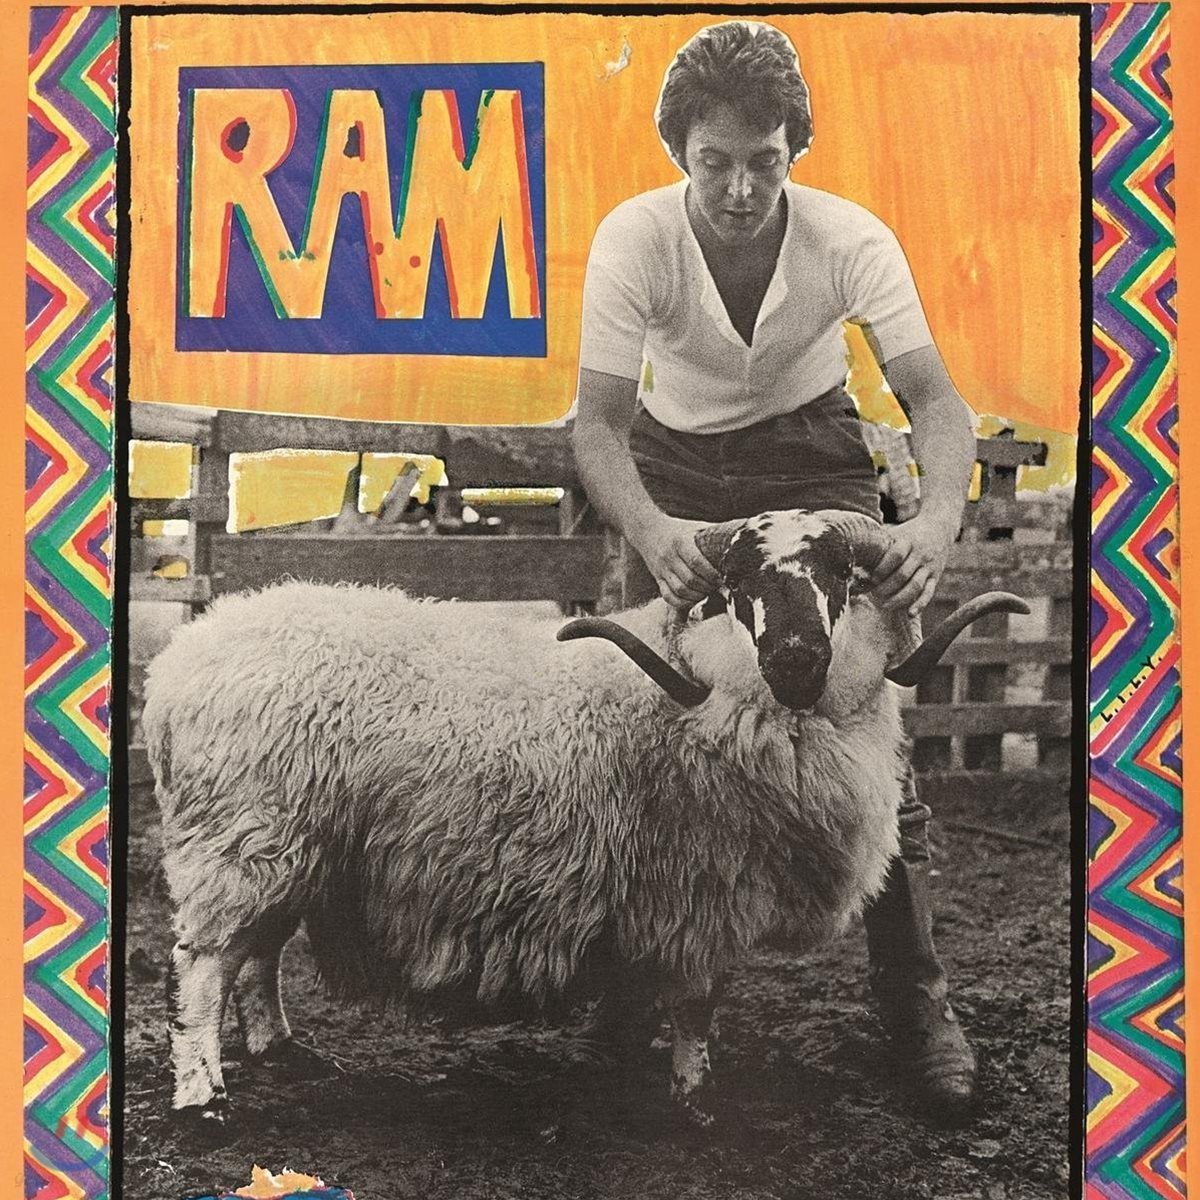 Paul &amp; Linda McCartney (폴 &amp; 린다 매카트니) - Ram